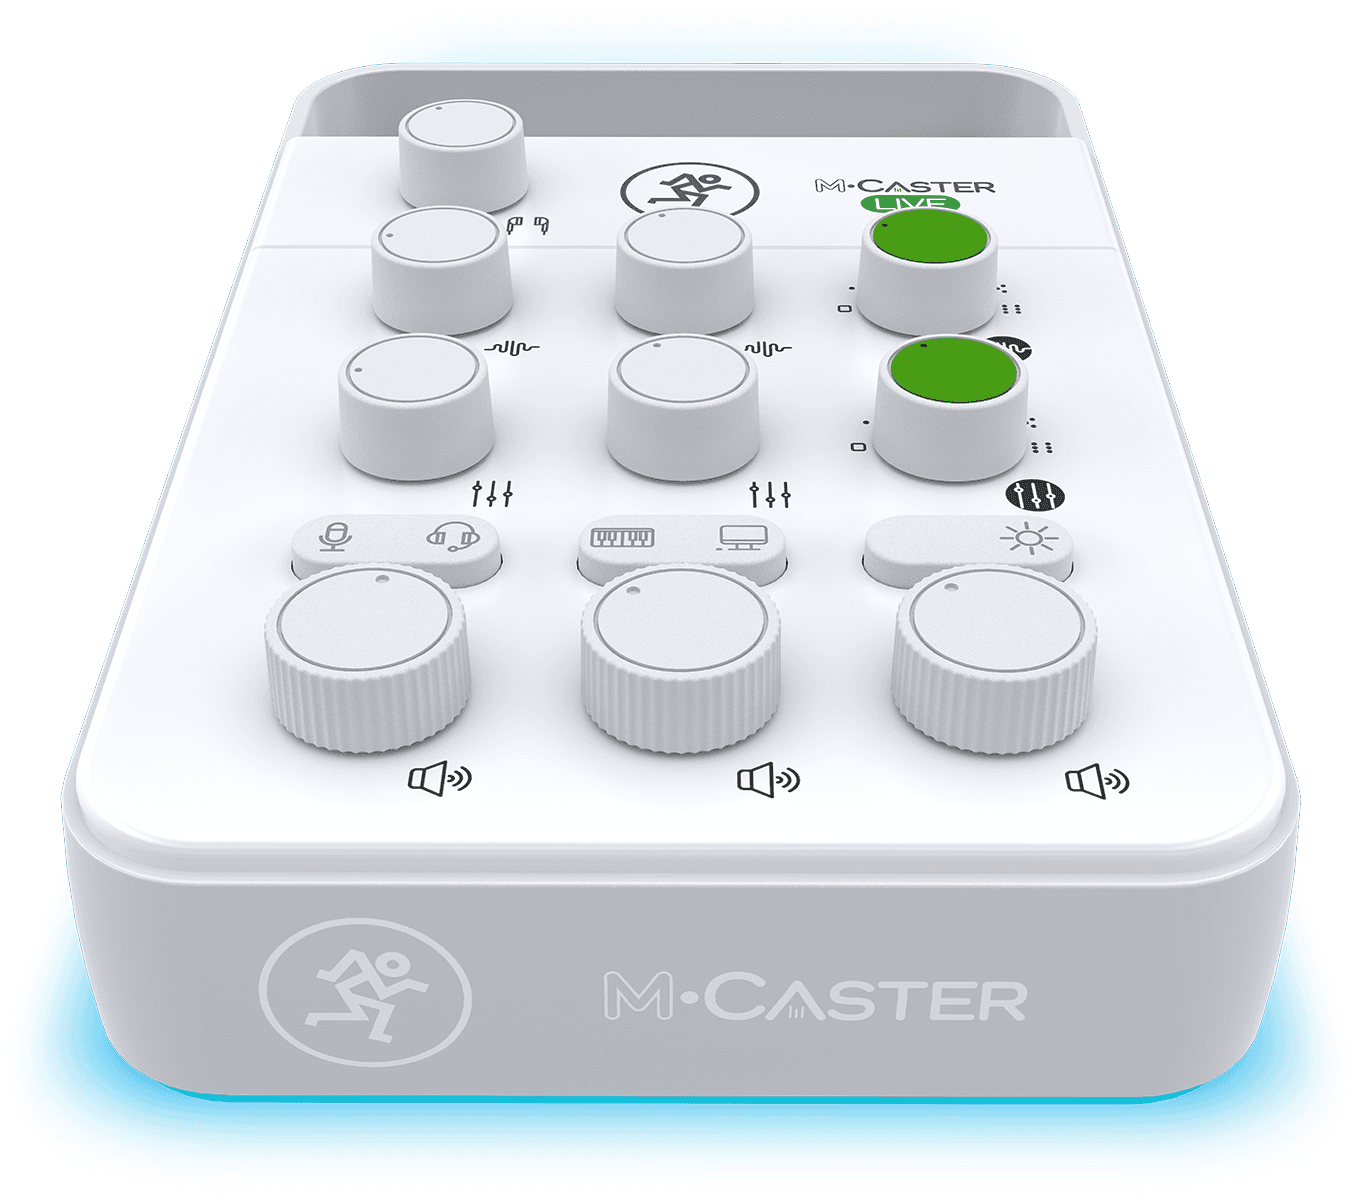 Mackie Mcaster-live White - USB audio-interface - Variation 8